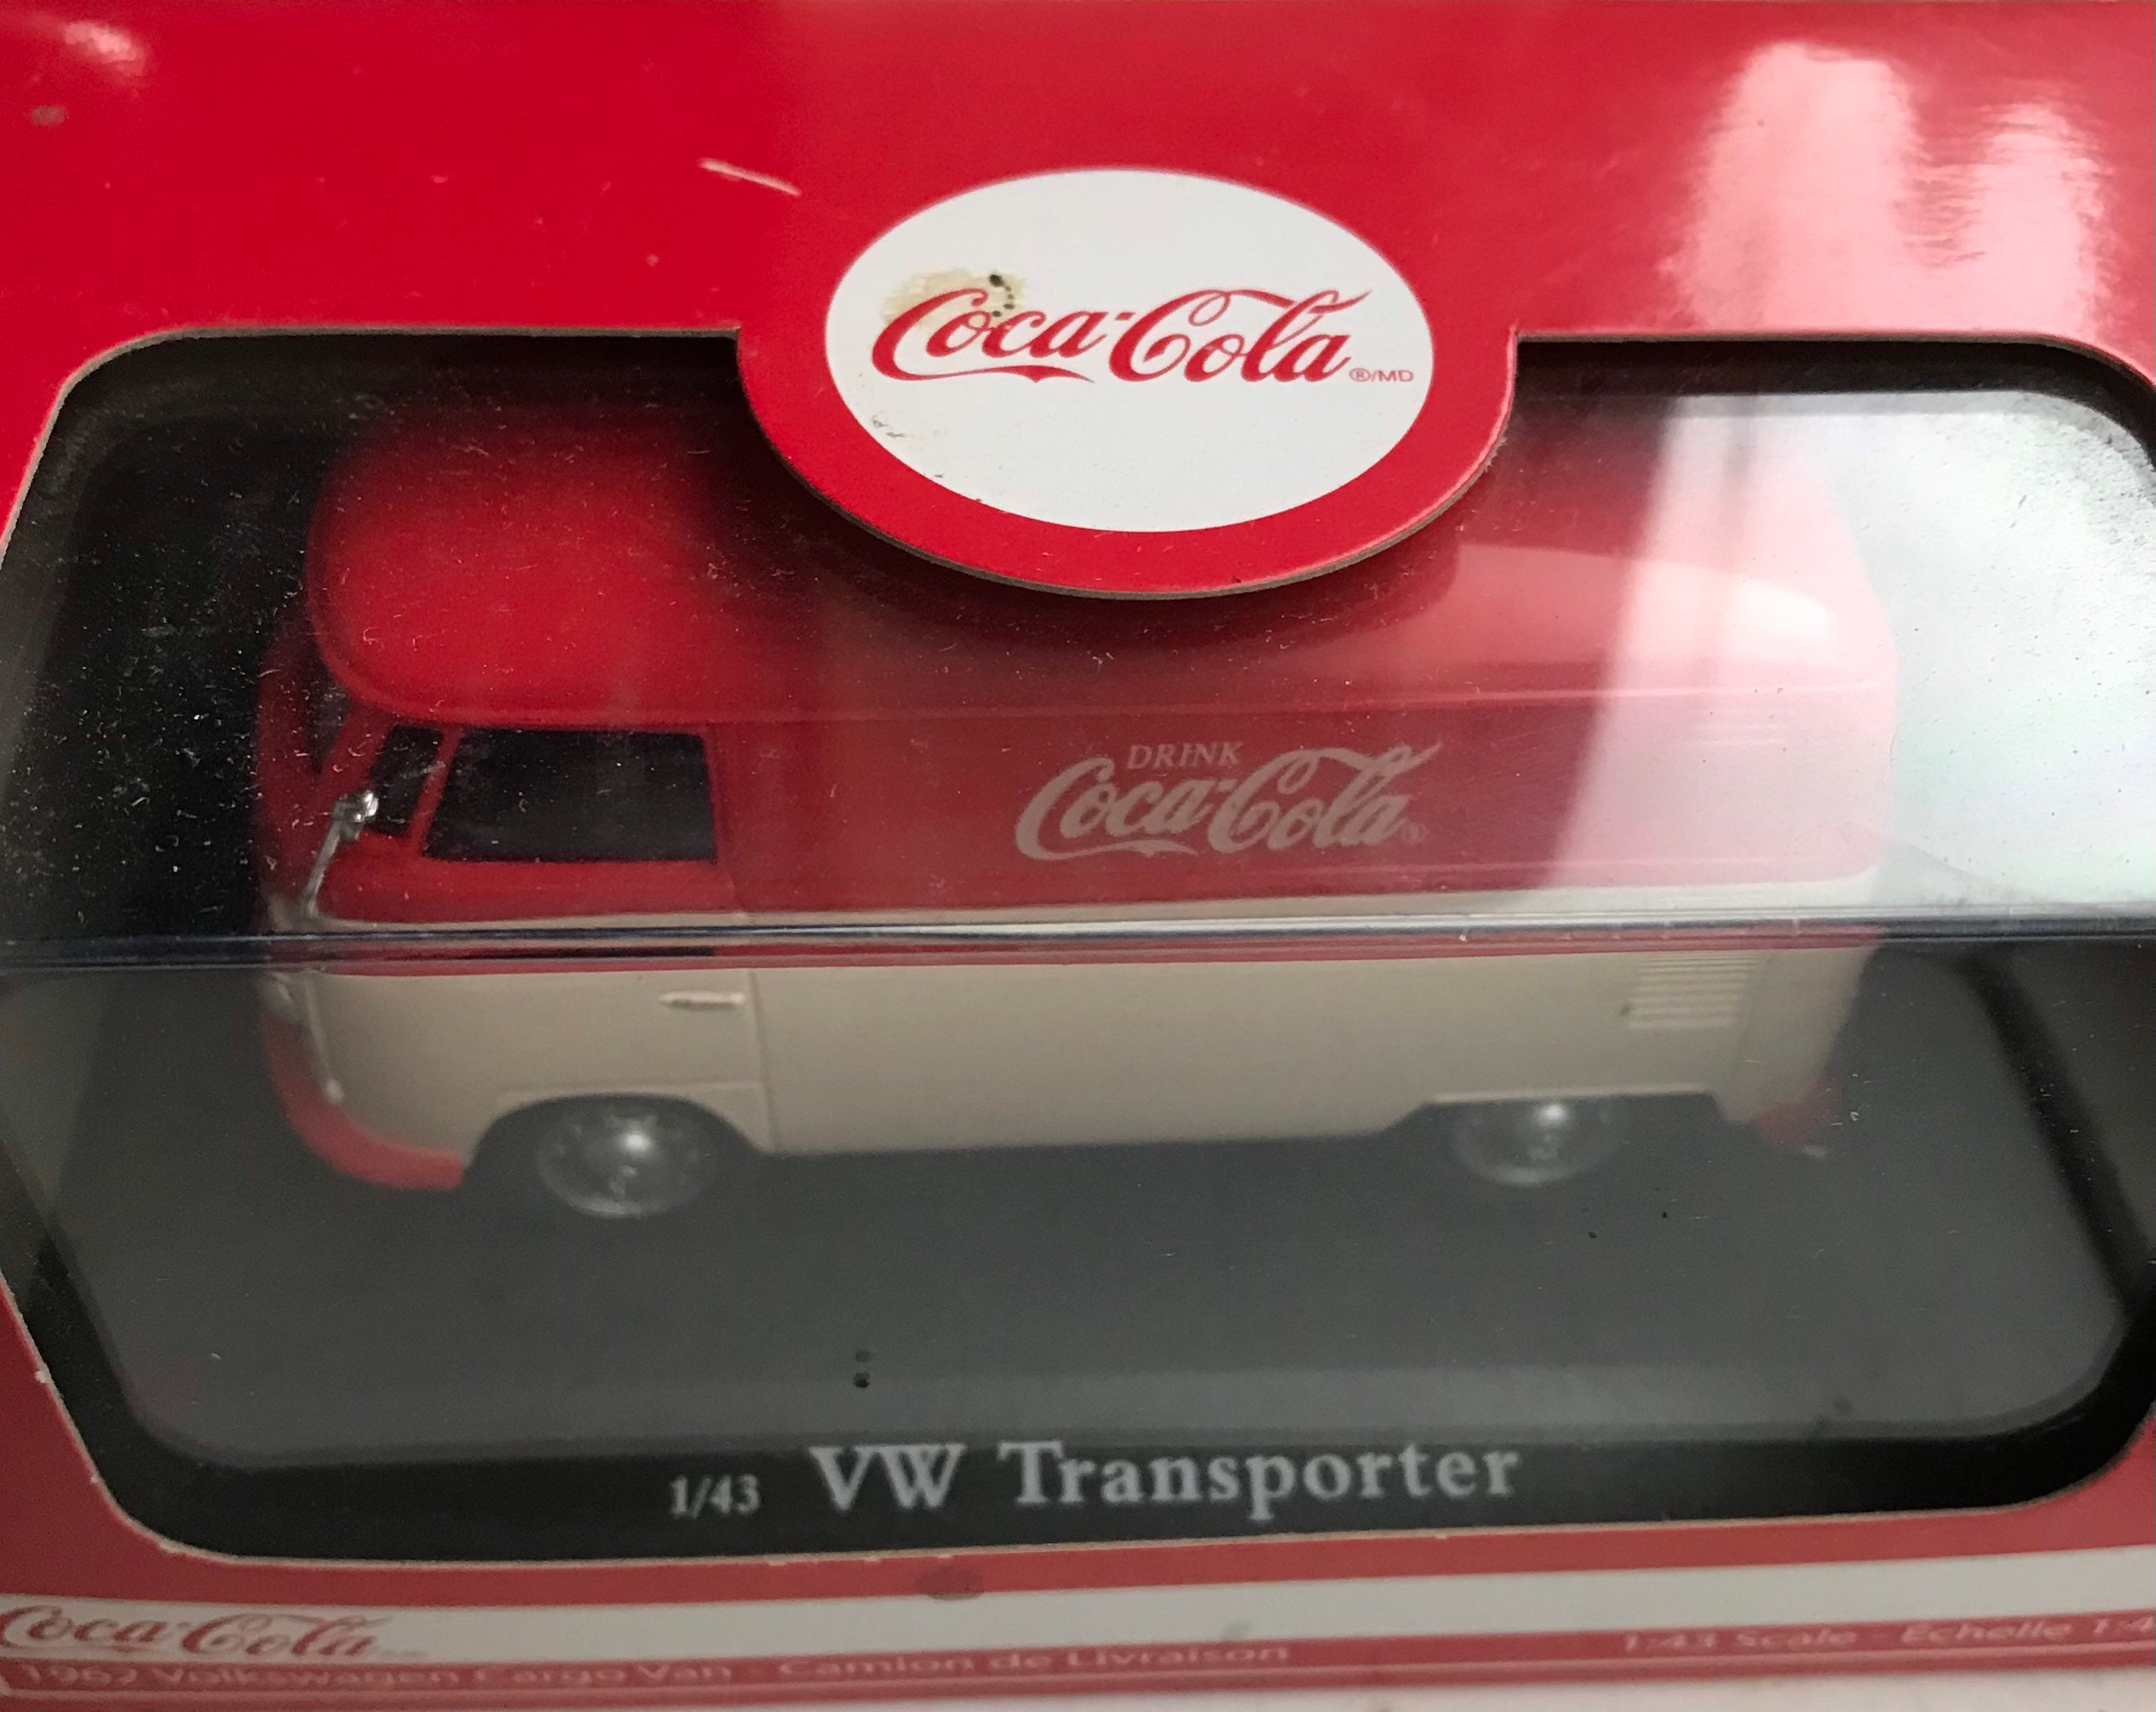 1/43 Scale 1962 VW Transporter Panel Bus in Original Coca Cola